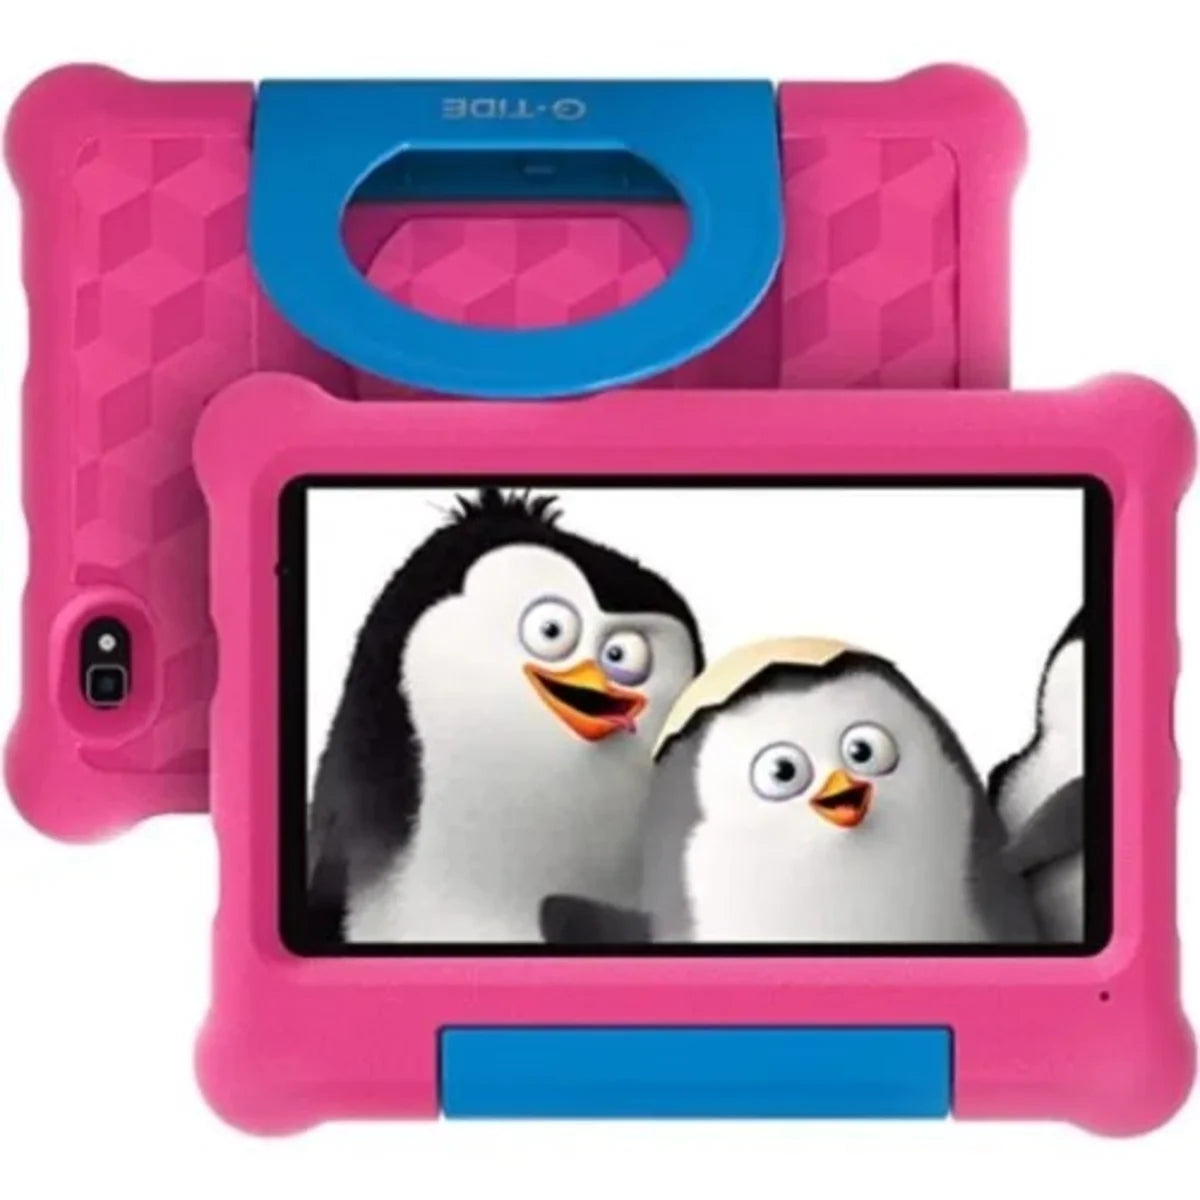 Tablette educative pour Enfants Android Bebe-Tab B787 - 32Go ROM - 2Go RAM  - 3000mAh - WiFi